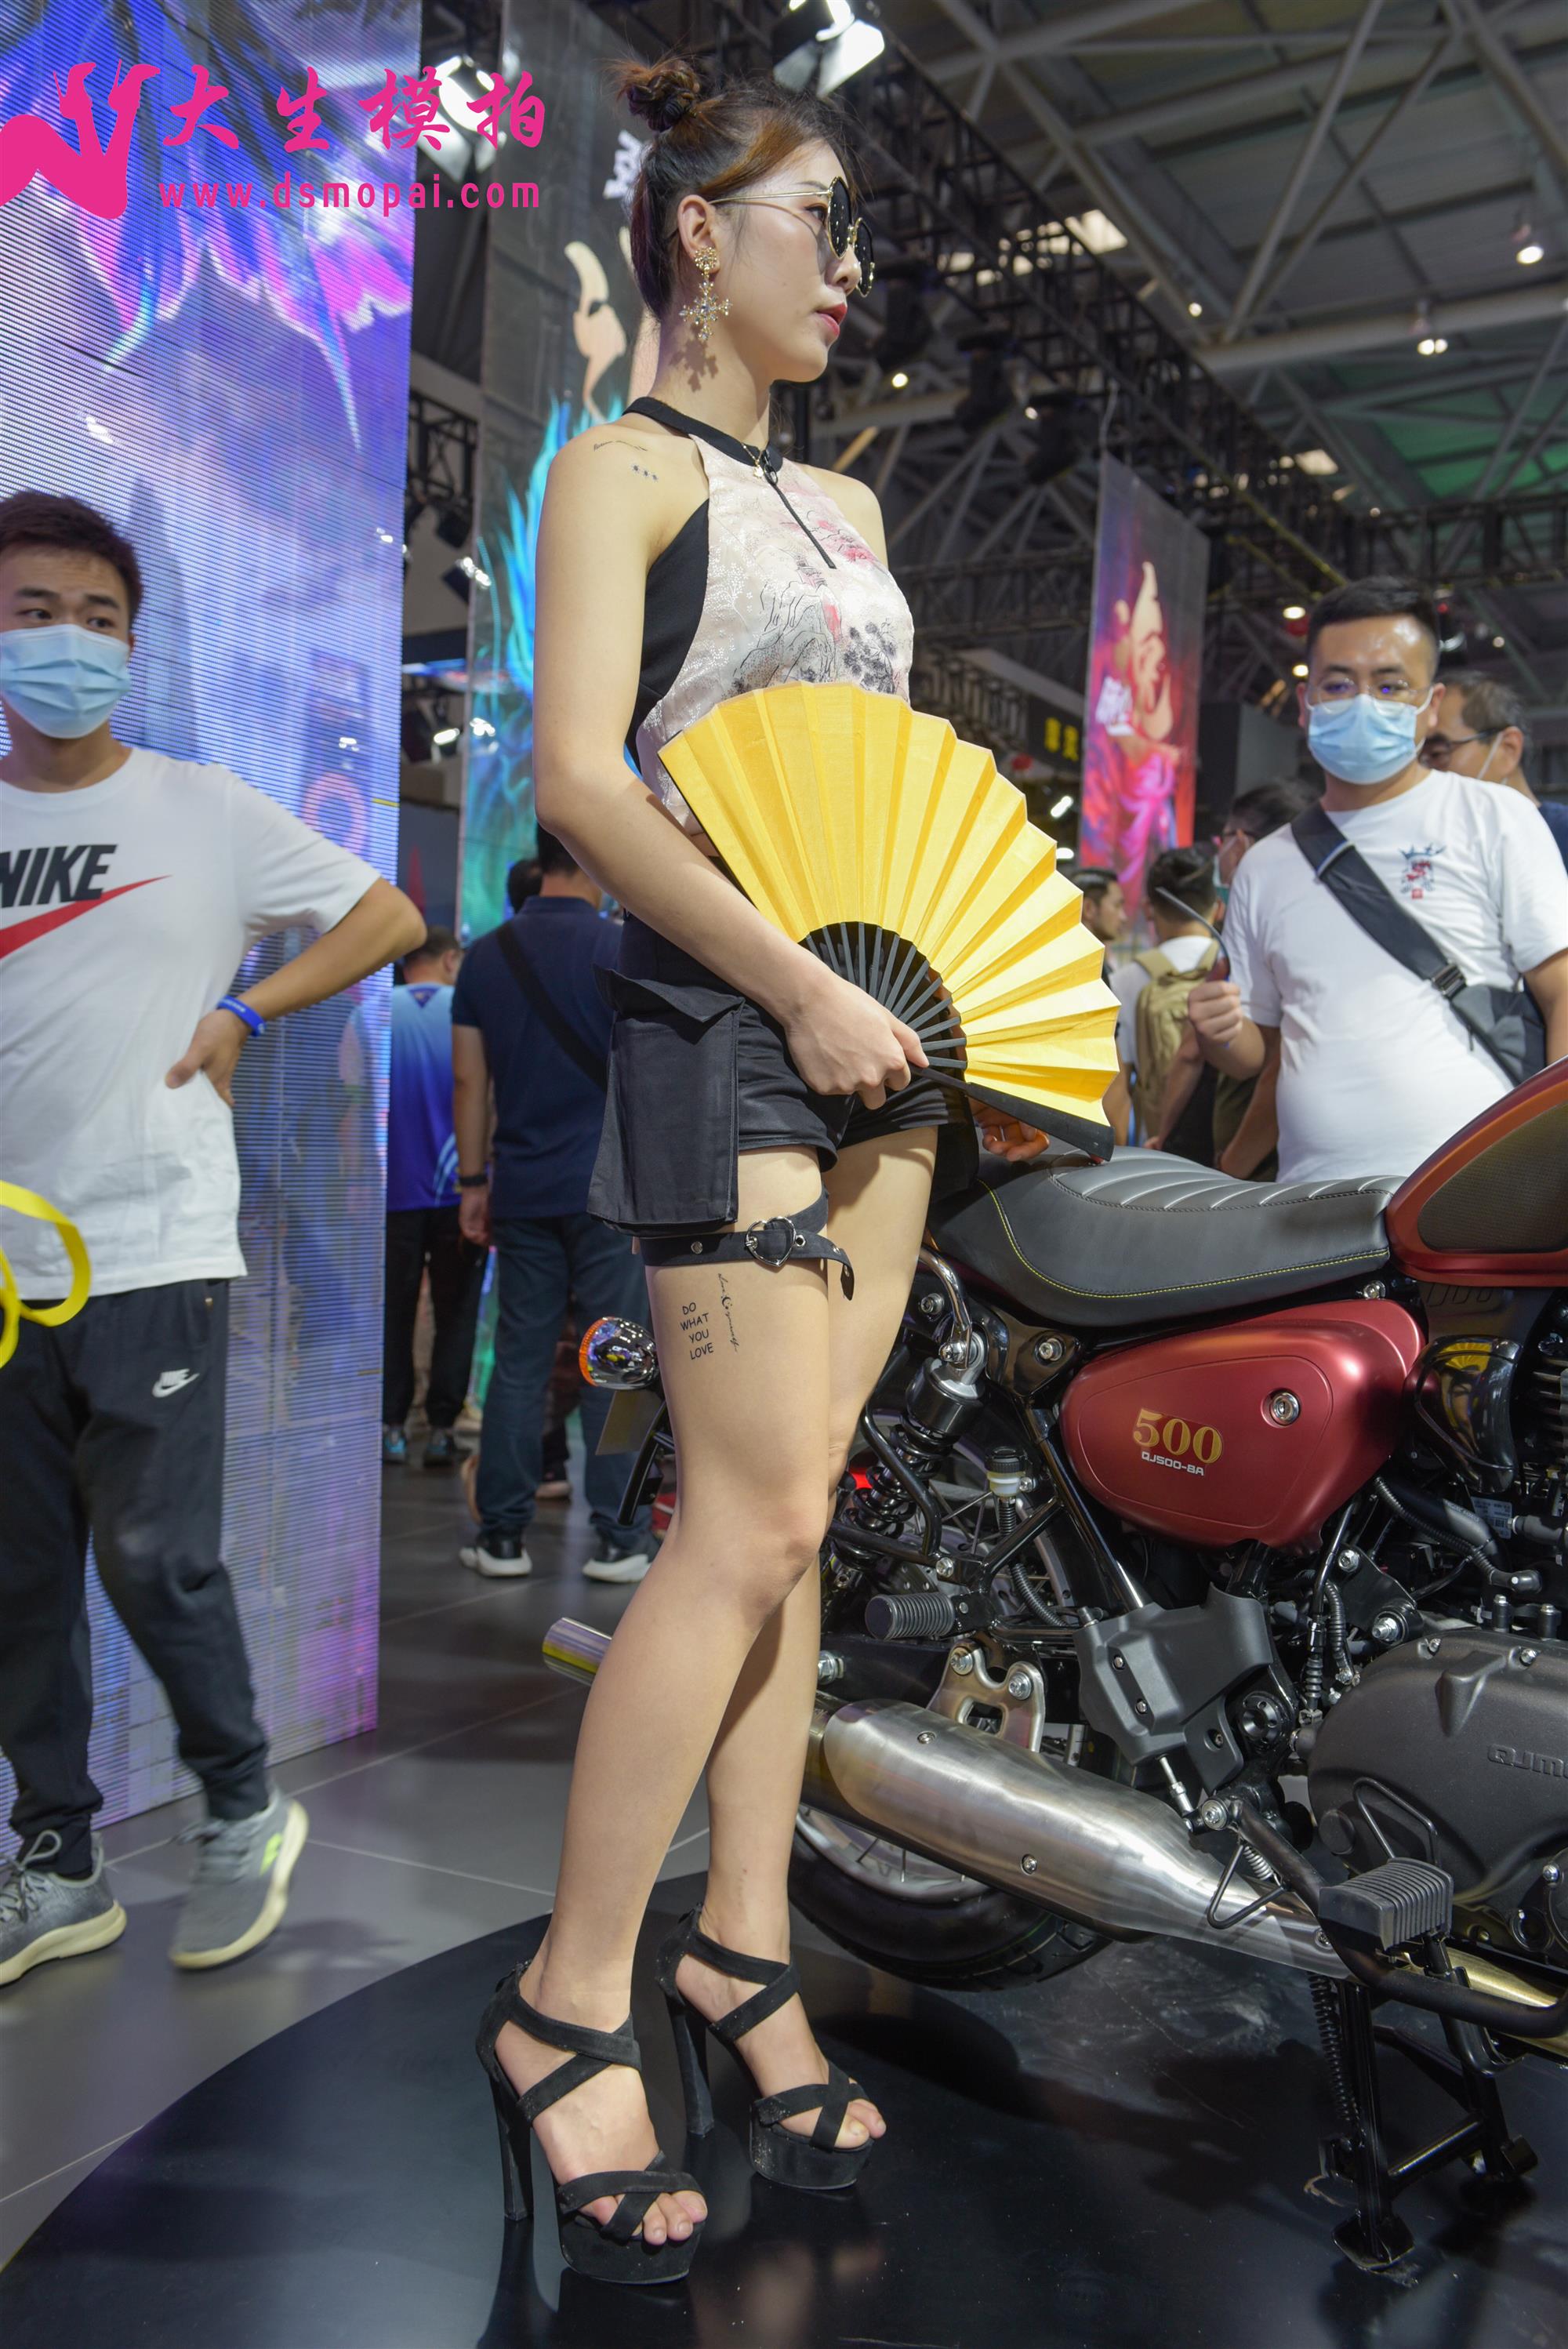 DSMP 大生模拍 No.249 第十八届中国国际摩托车展览会模特 - 36.jpg